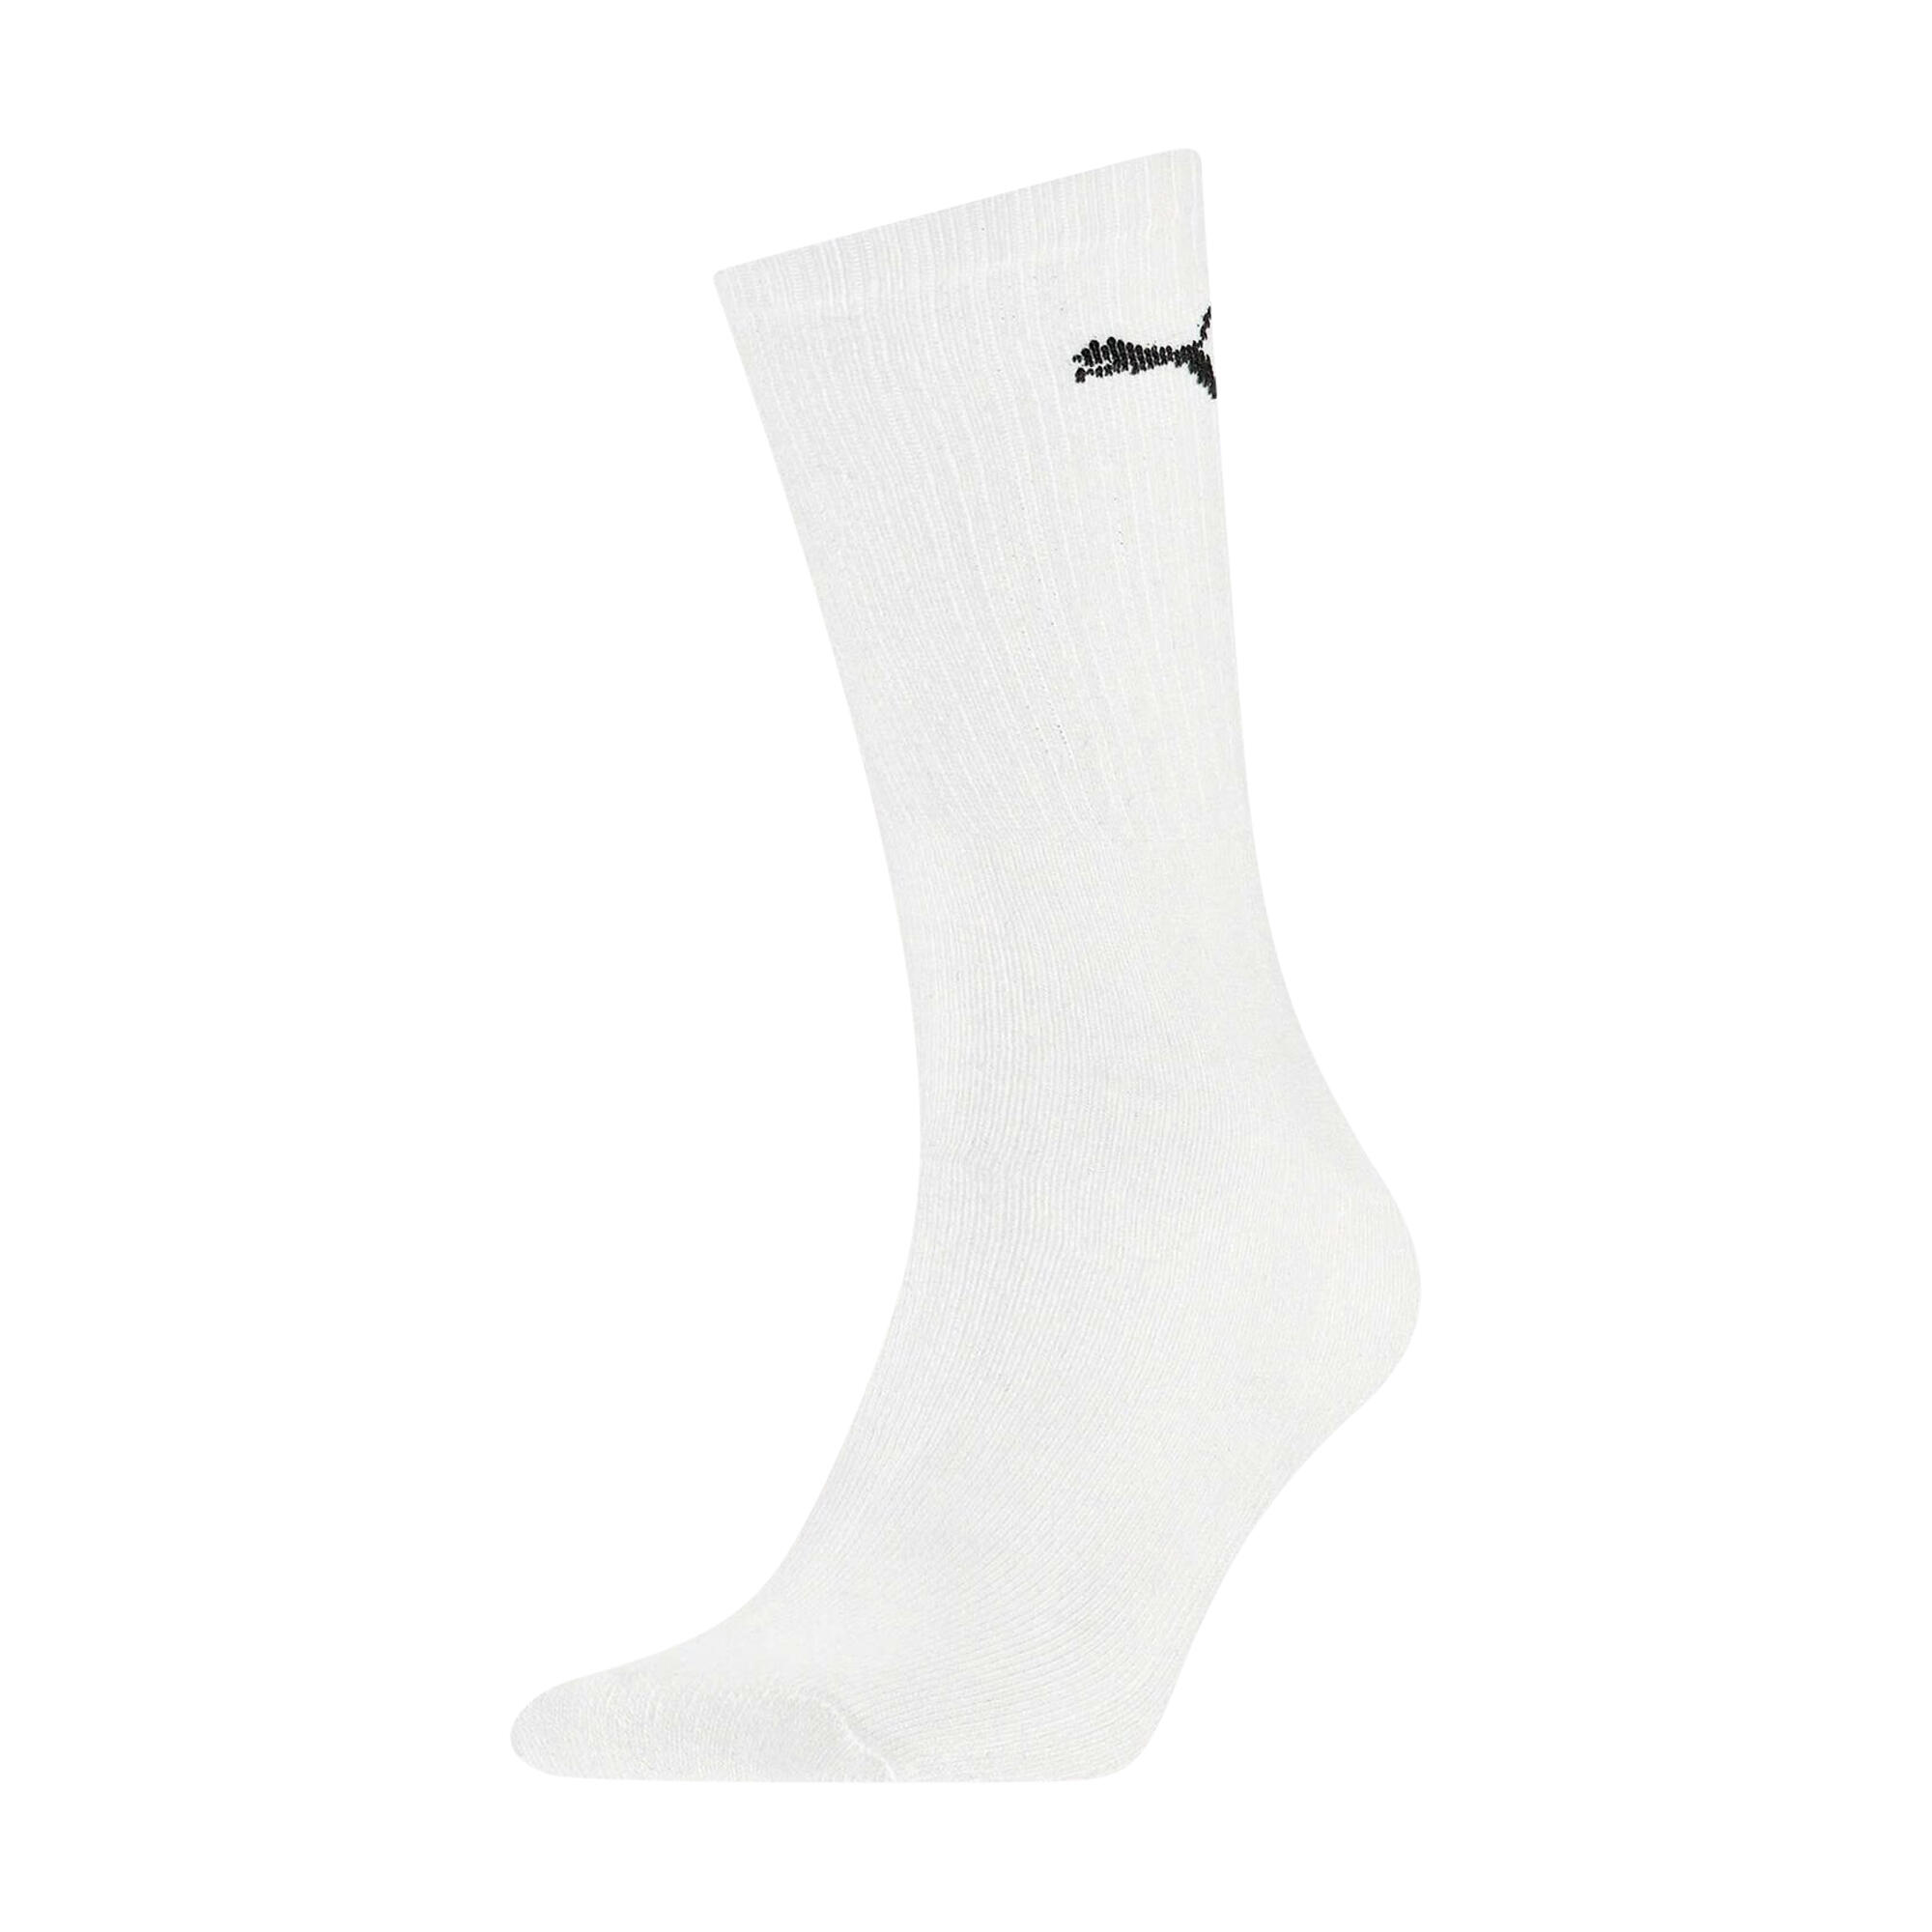 Unisex Adult Crew Sports Socks (Pack of 3) (White) 1/3